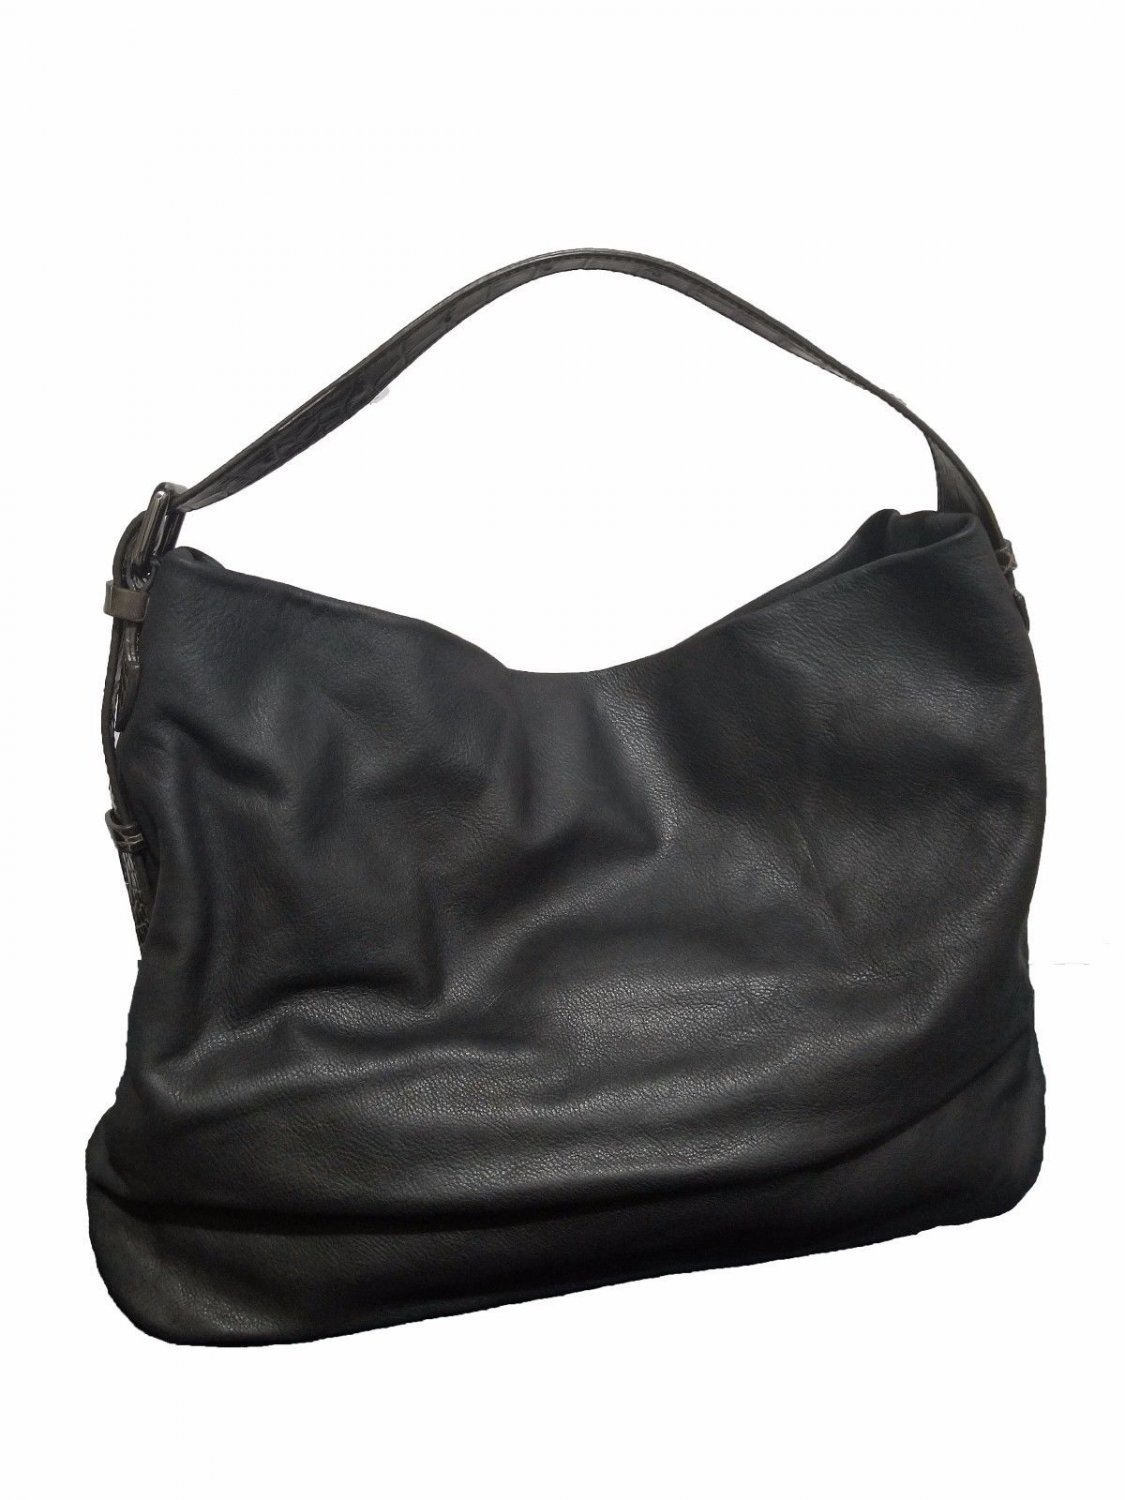 Paule Ka Women's Black Leather Tote Bag & Shoppers Bag